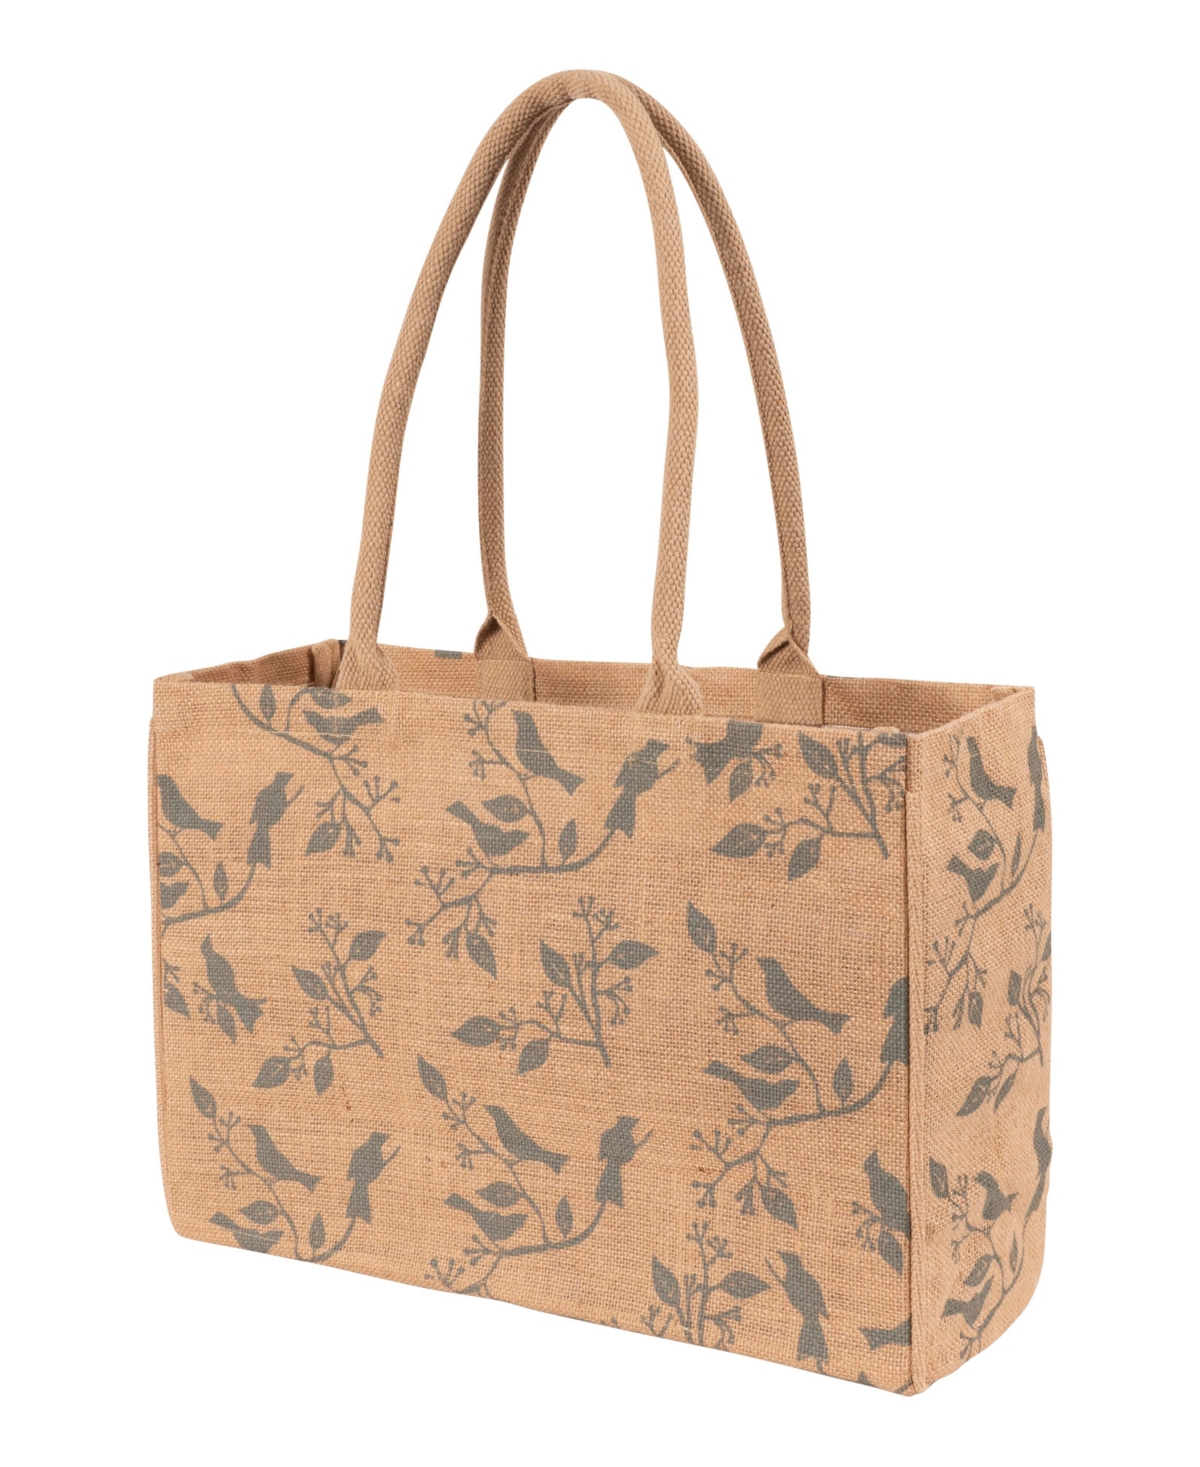 Kaf Home Jute Market Tote Bag With Birds Print In Beige